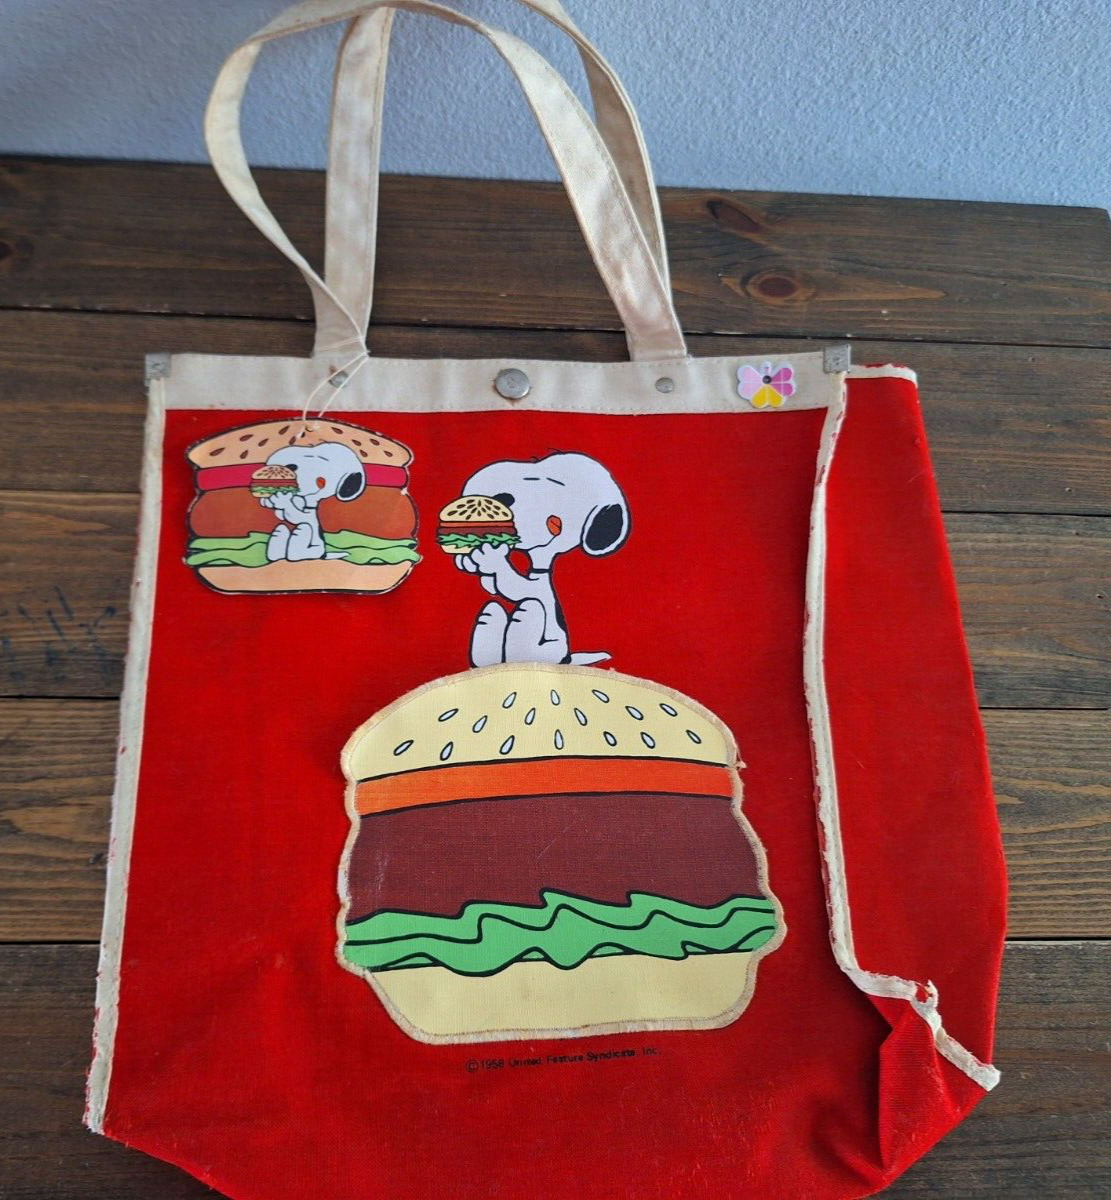 1958 VTG Snoopy Red Tote Canvas Bag Butterfly Original Hamburger Peanuts W/ Tag